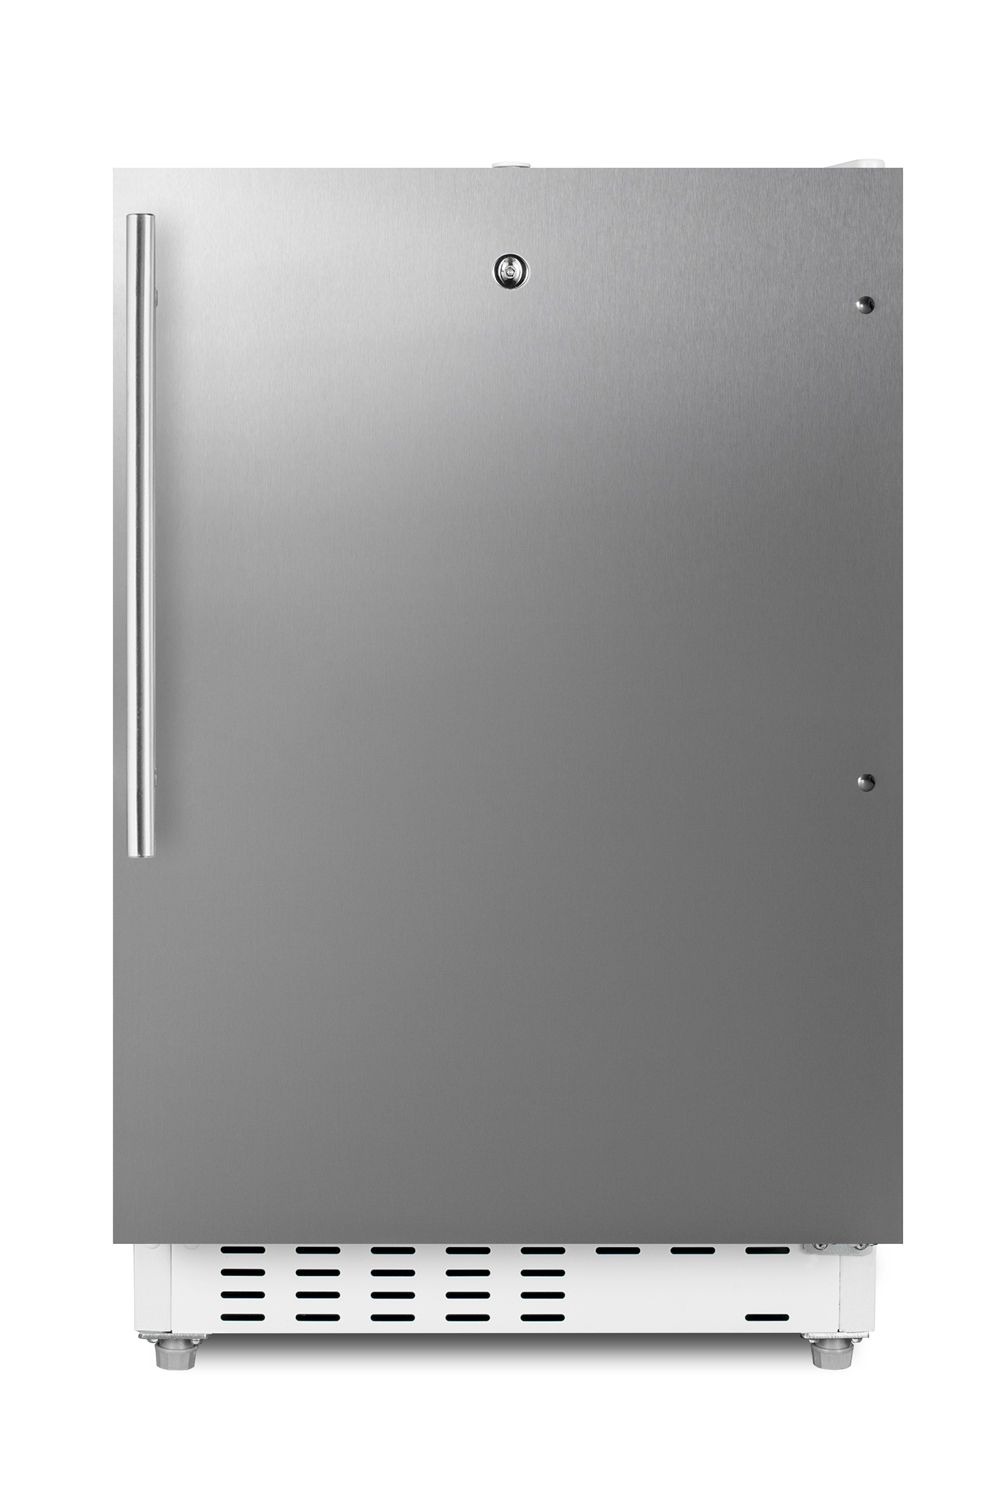 Summit 21" Wide Built-in Refrigerator-Freezer, ADA Compliant